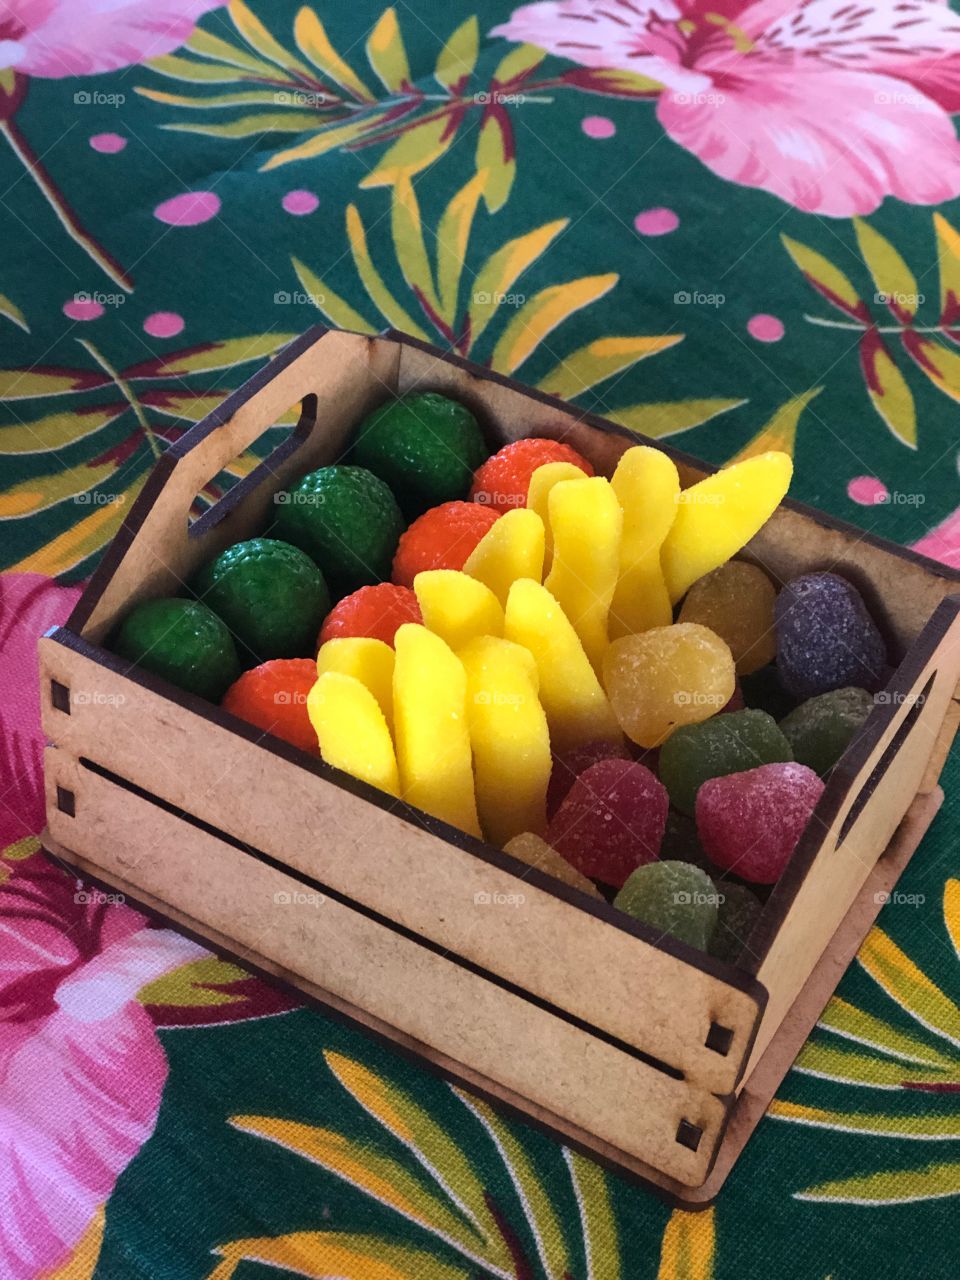 Little fruit candies for party decoration